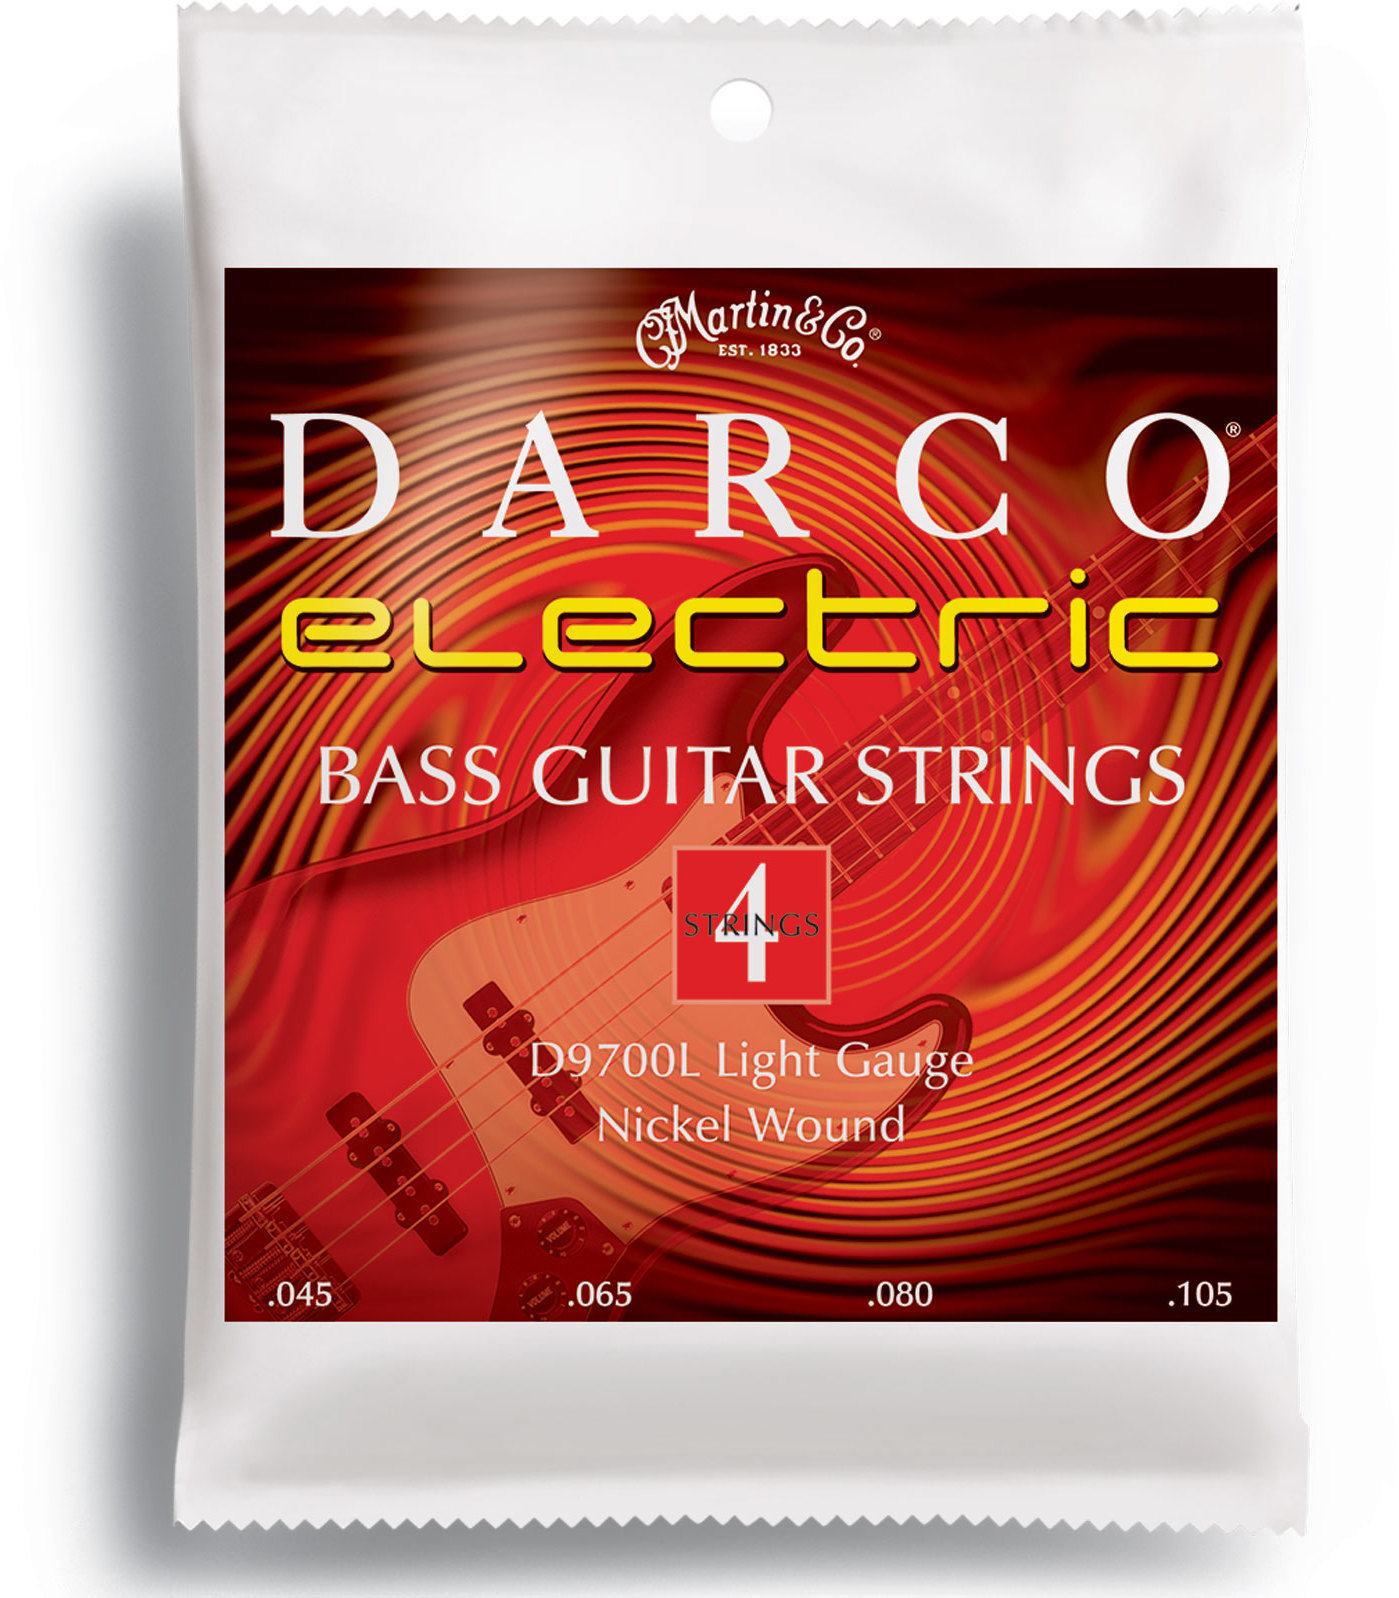 Struny pro baskytaru Darco D9700L Darco Four String Electric Bass, Light